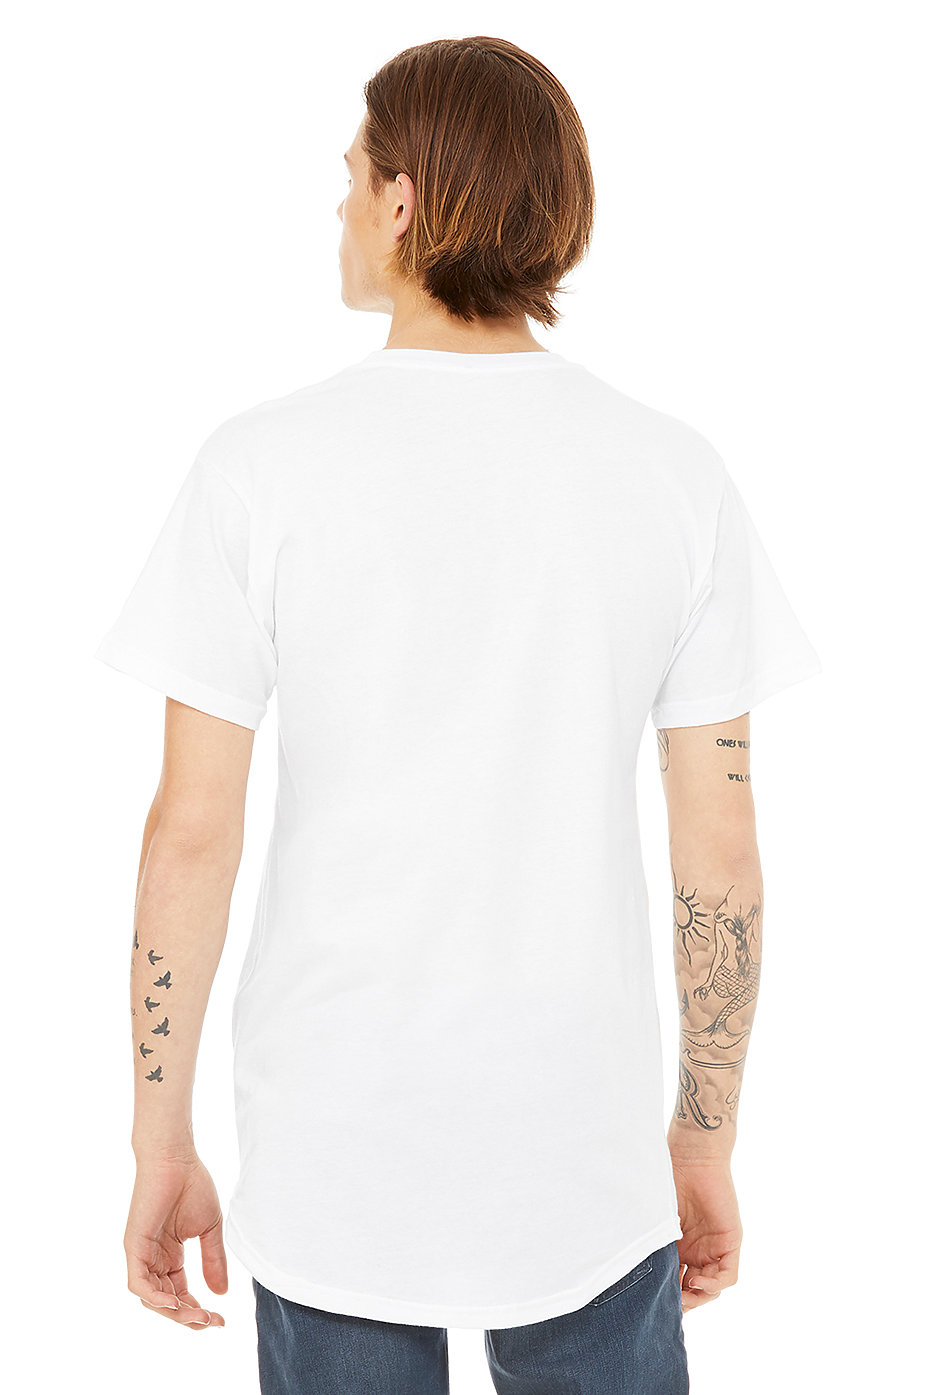 Los Angeles - Basic Black Premium Cotton T-Shirt